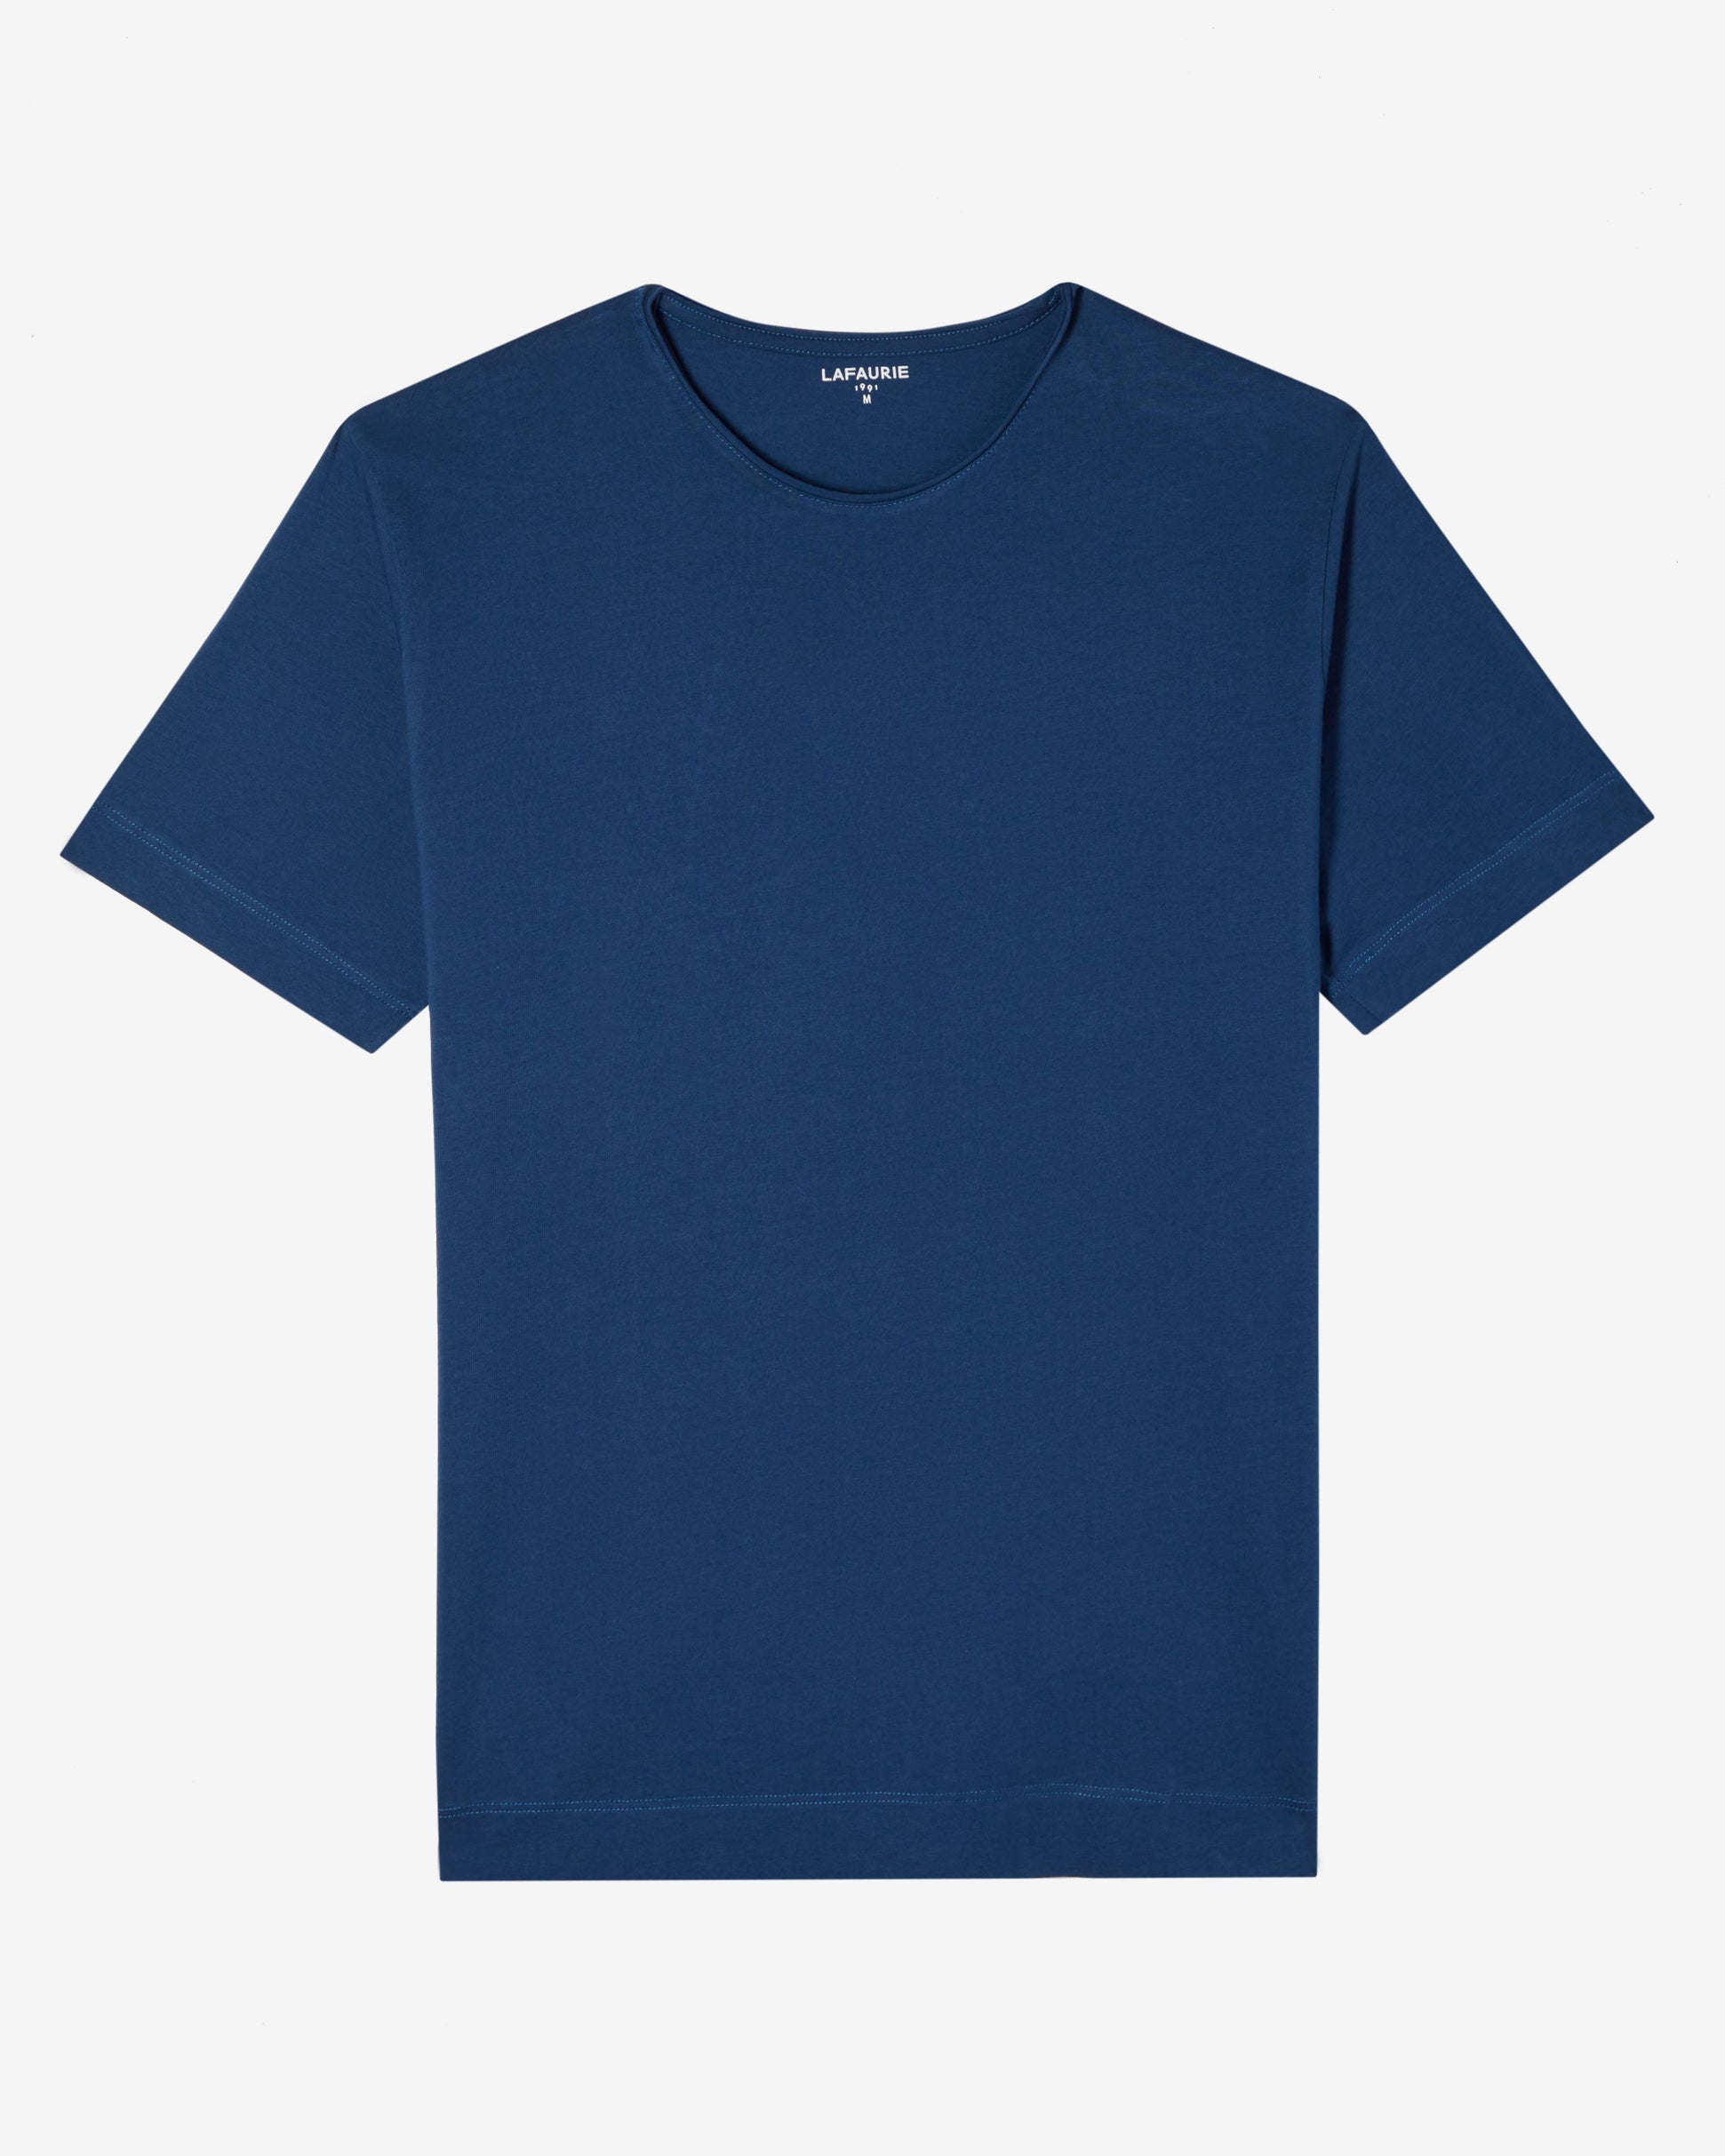 BASILE T-shirt - Atlantic